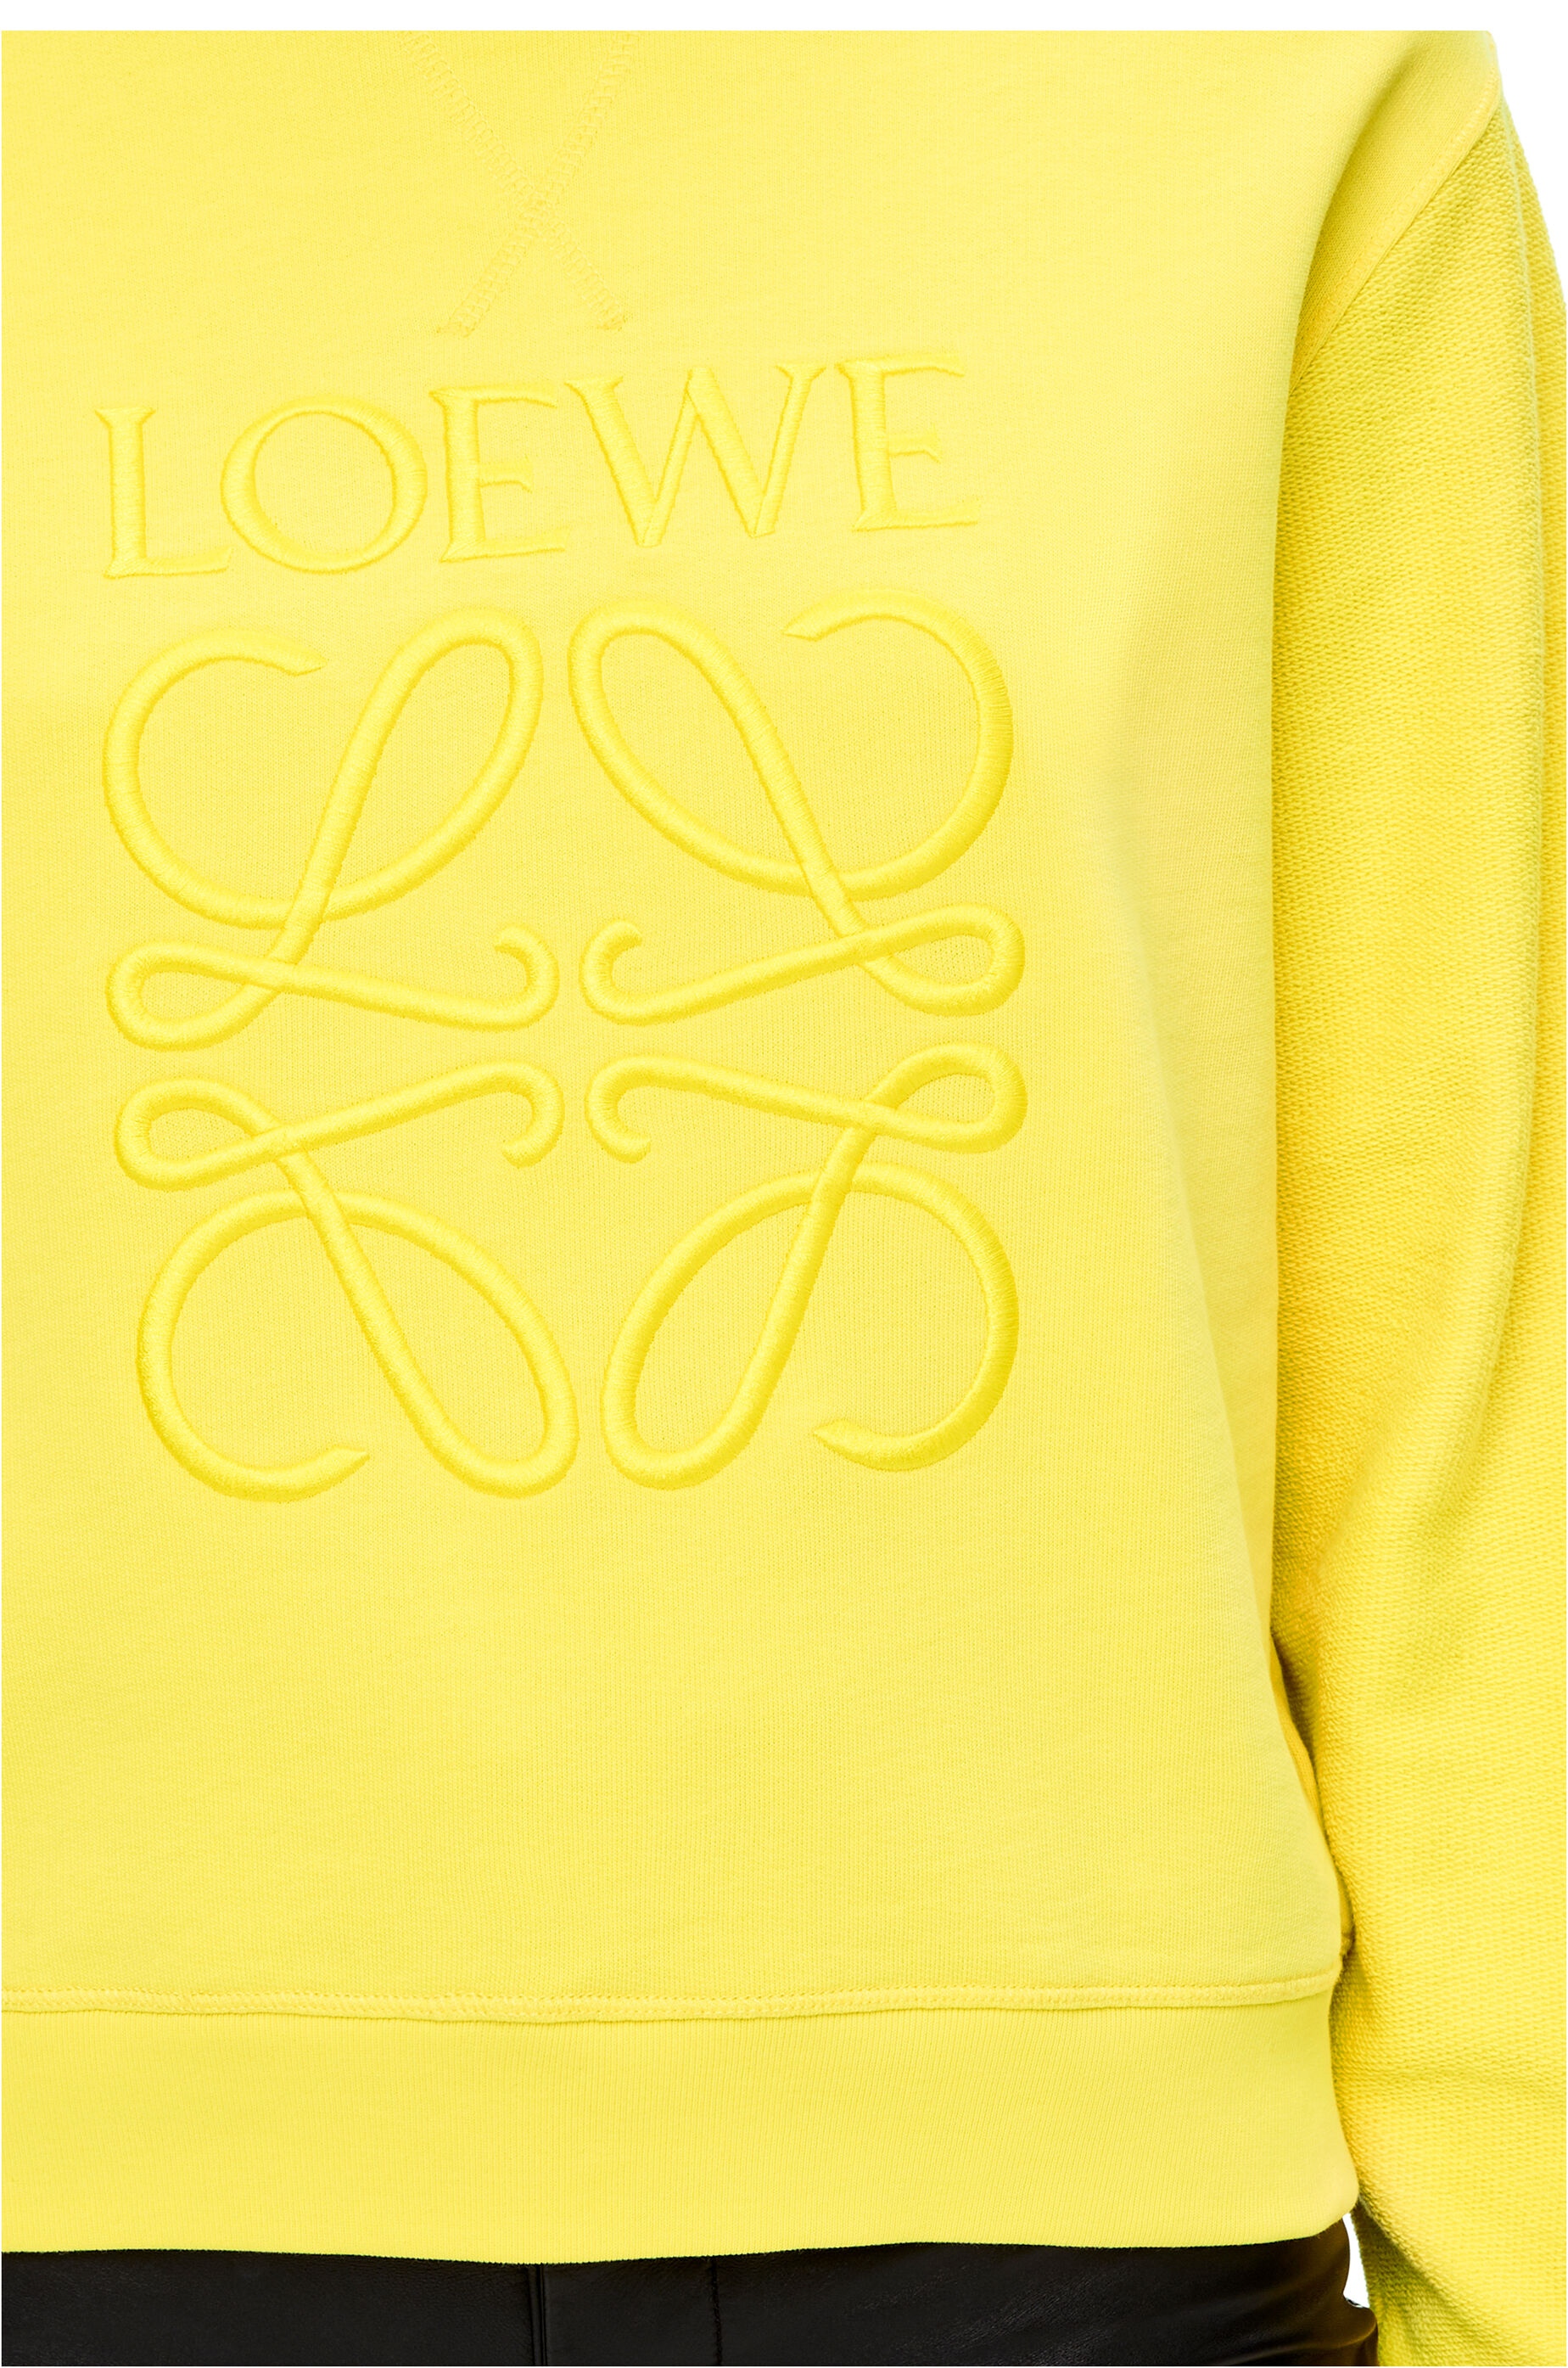 LOEWE Anagram embroidered sweatshirt in cotton